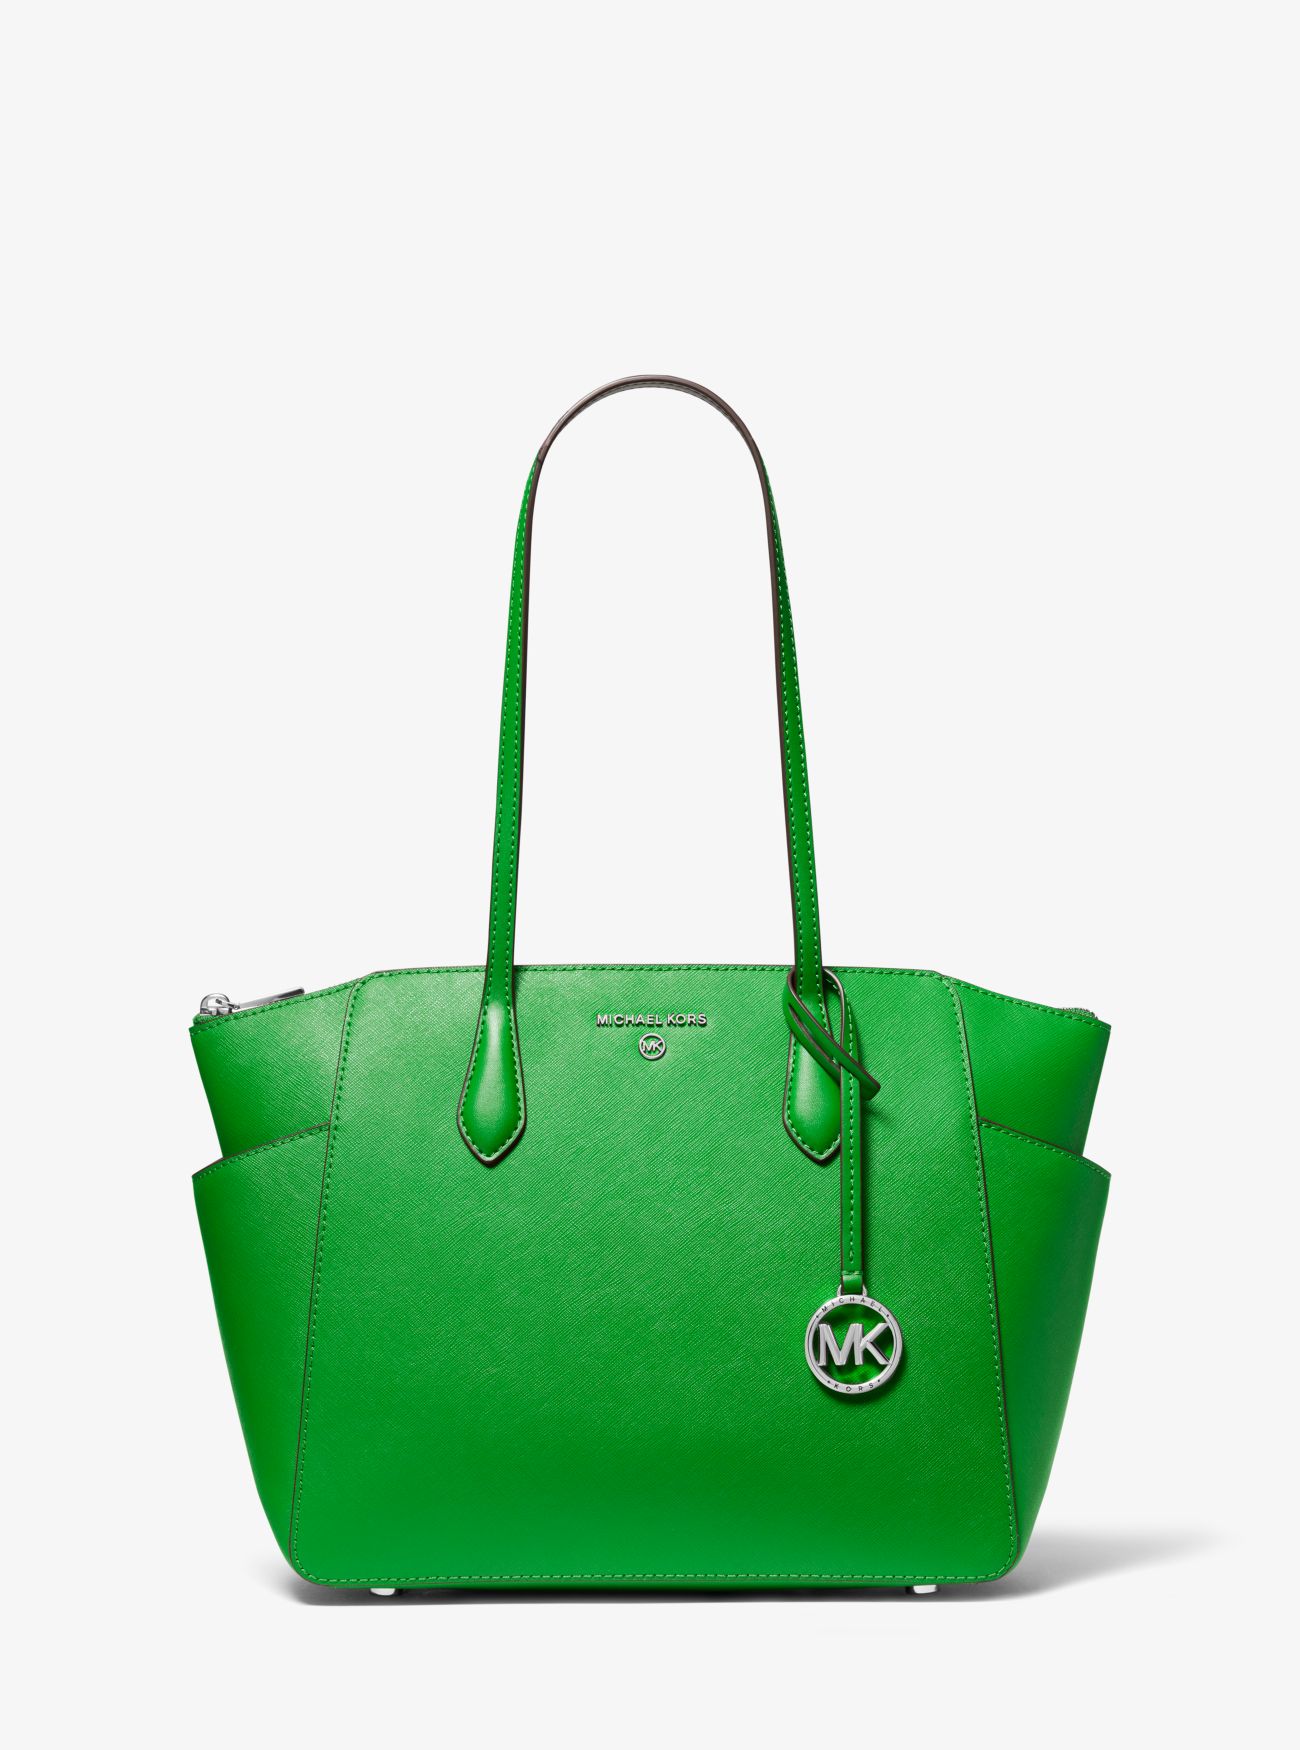 MK Marilyn Medium Saffiano Leather Tote Bag - Palm Green - Michael Kors